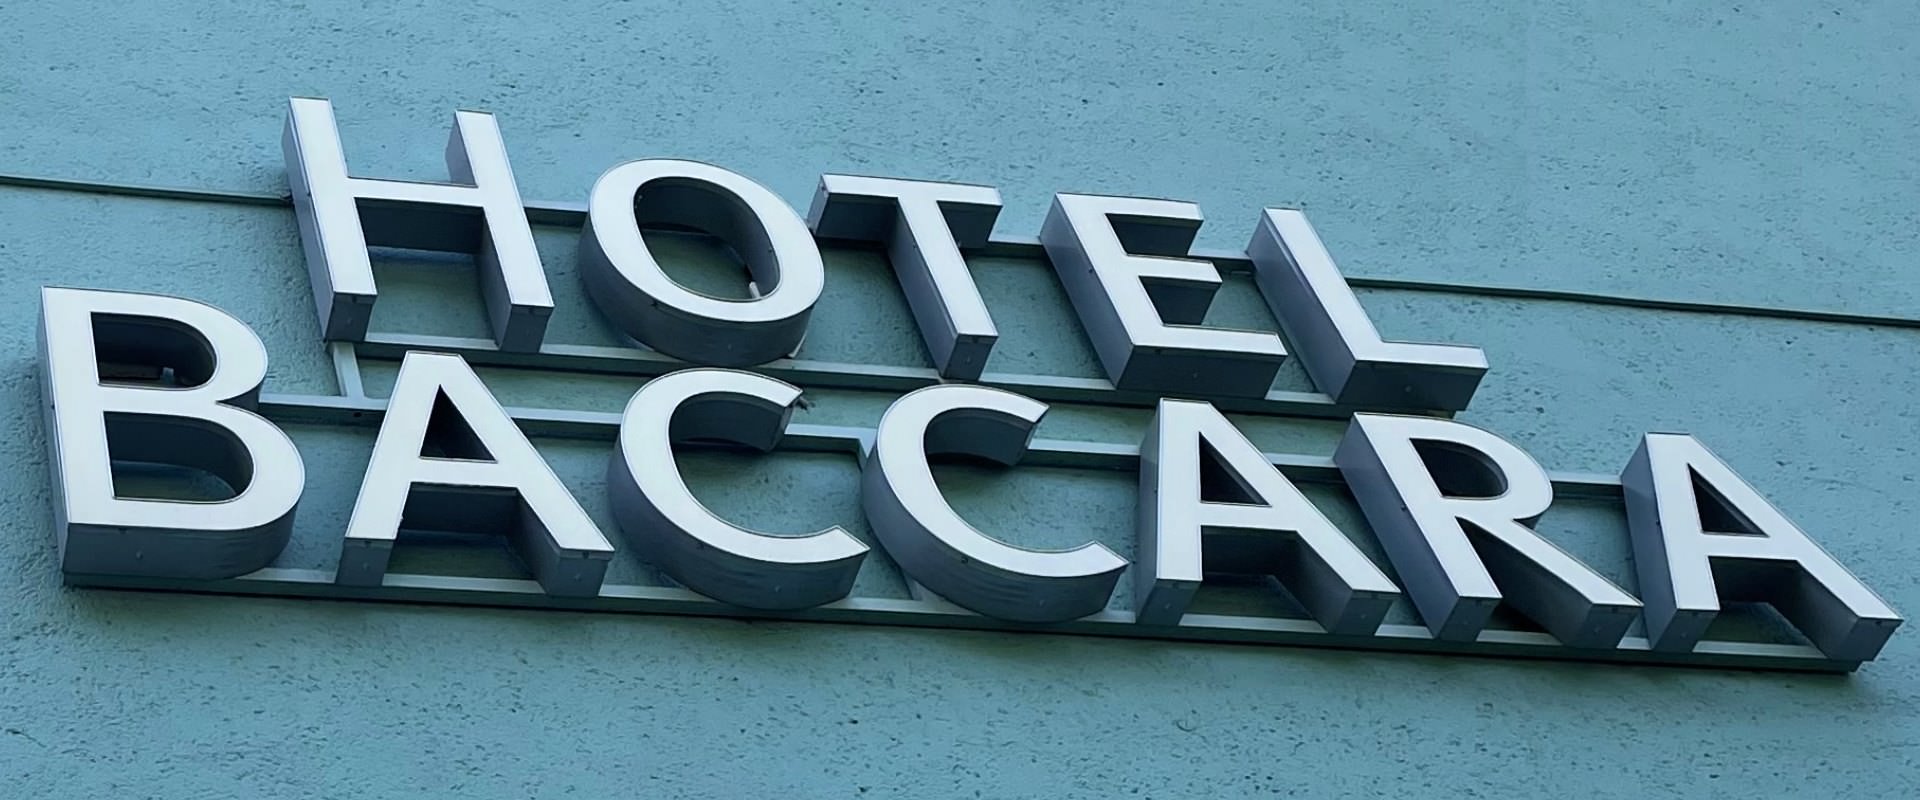 Hotel Baccara